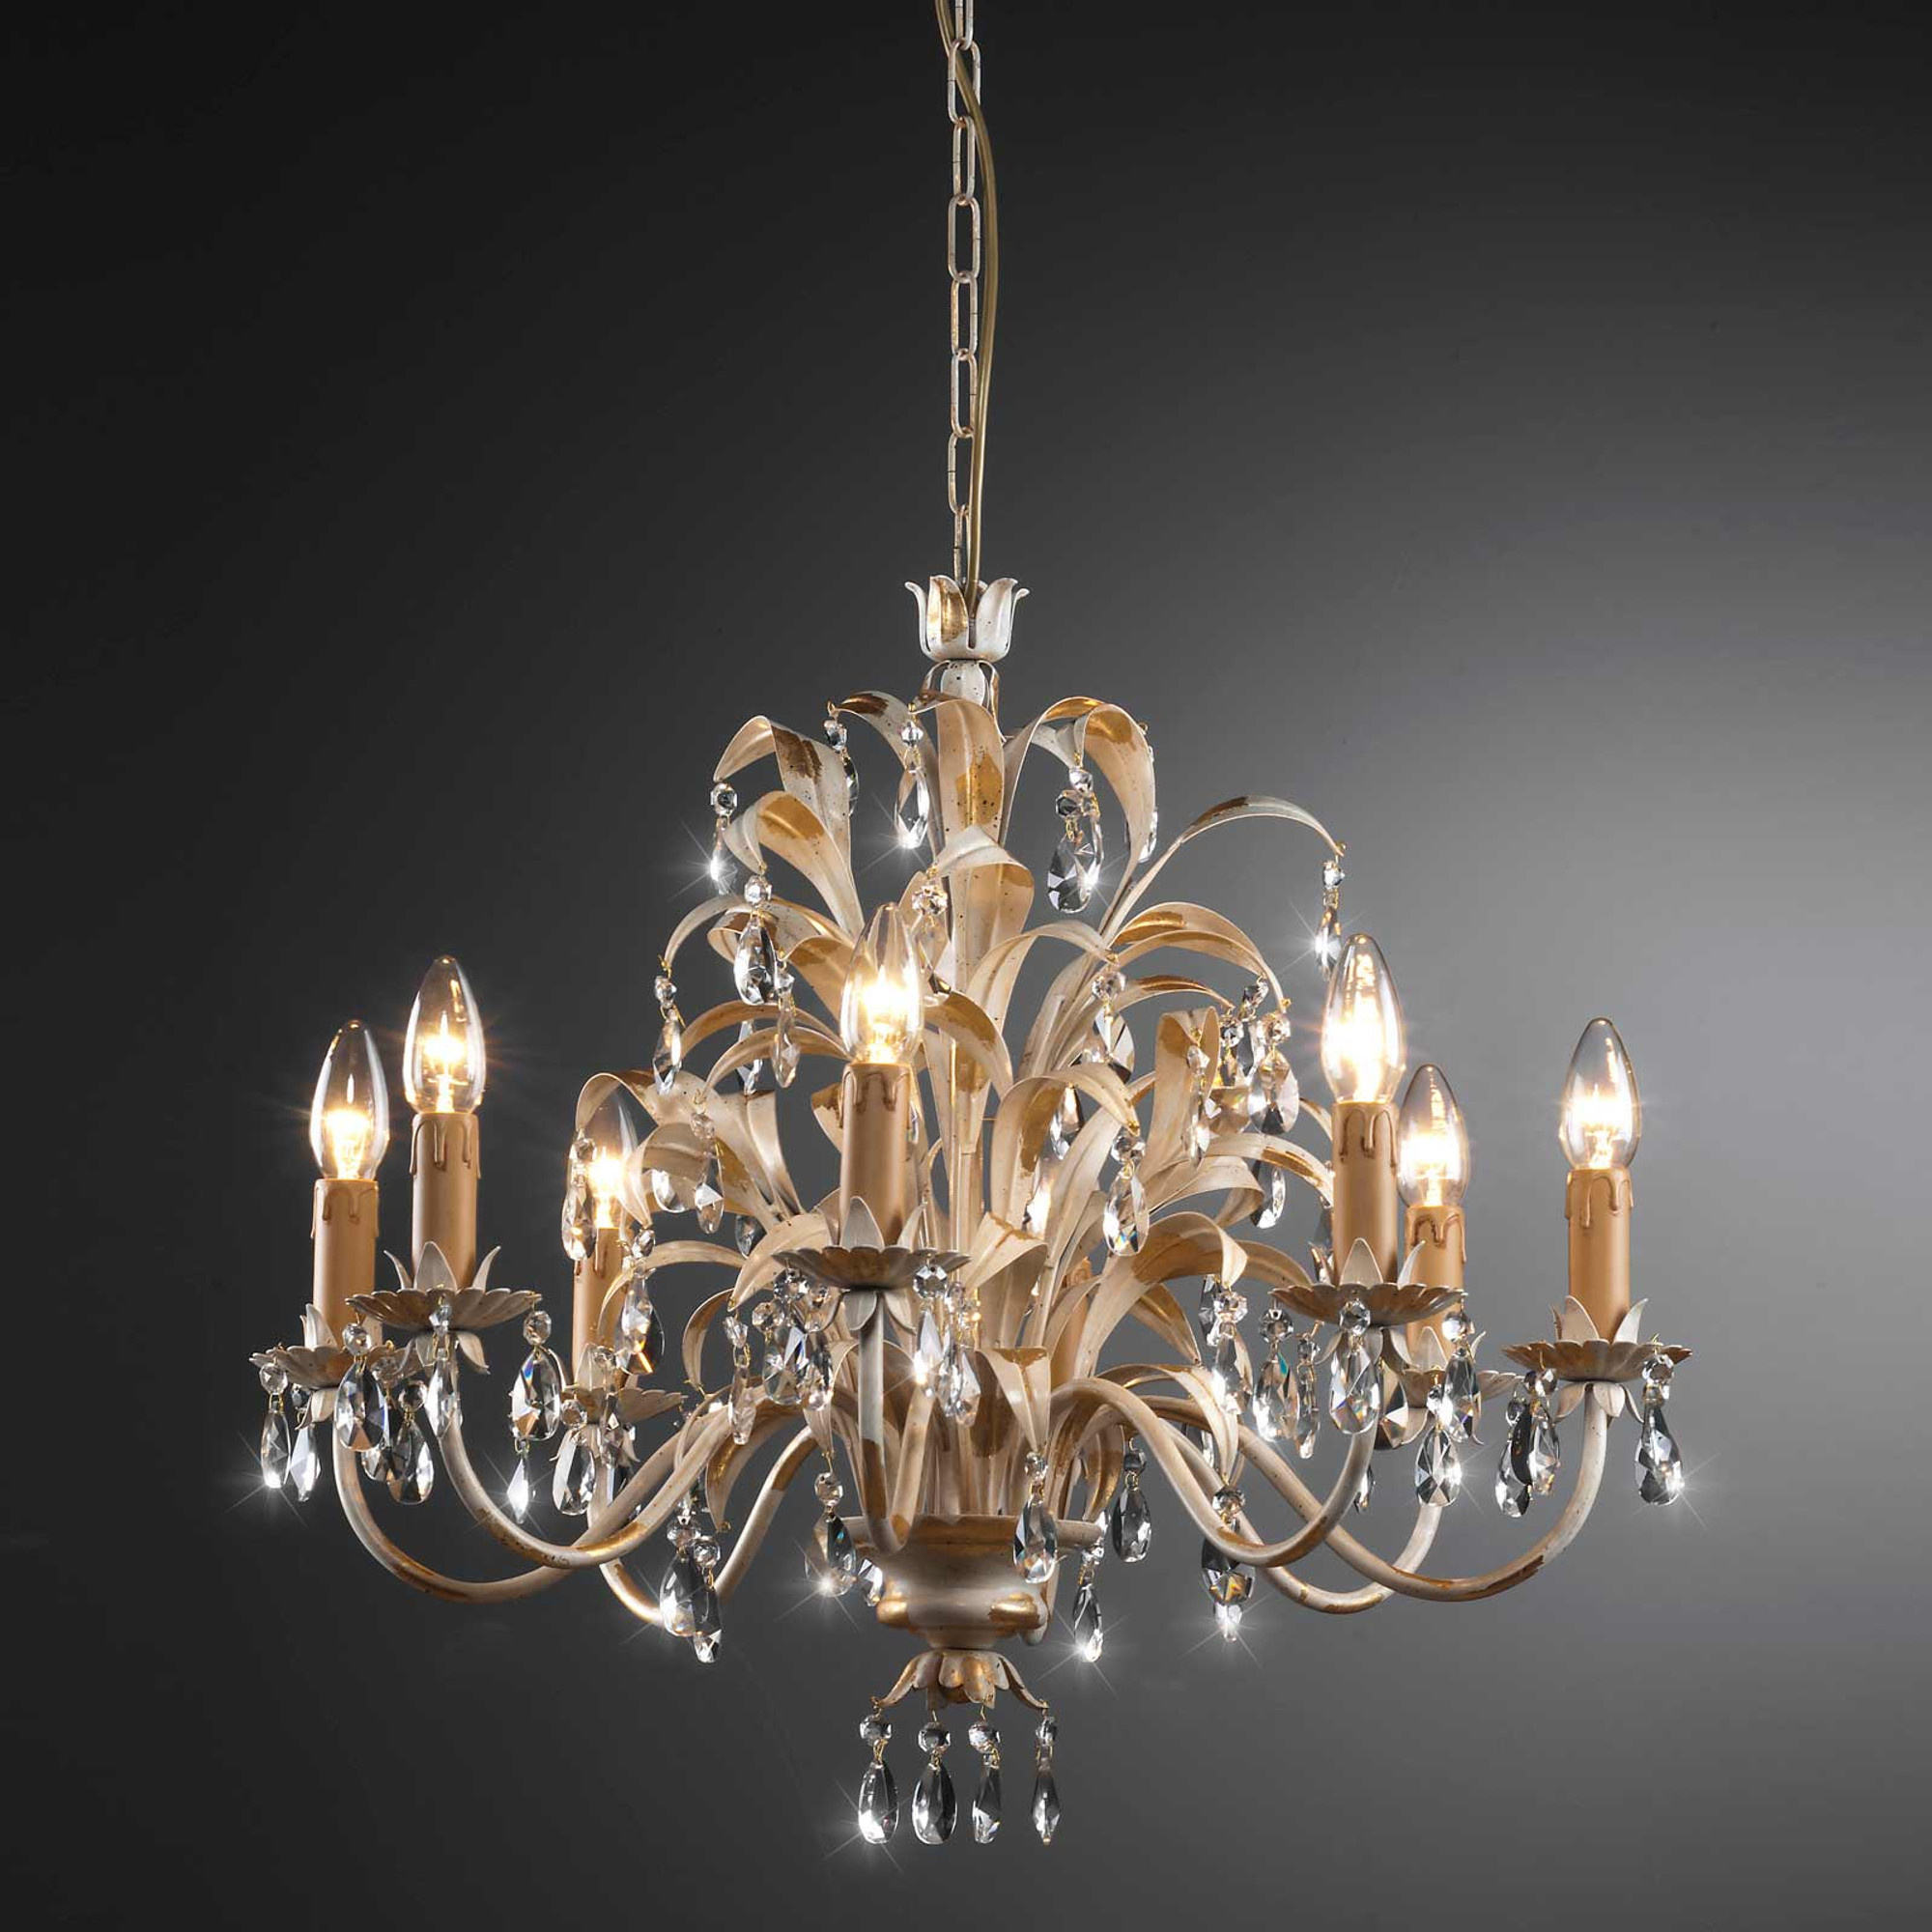 Ferro Luce chandelier, Candelabra style, Italian craftsmanship, Unique lighting fixture, 2000x2000 HD Phone